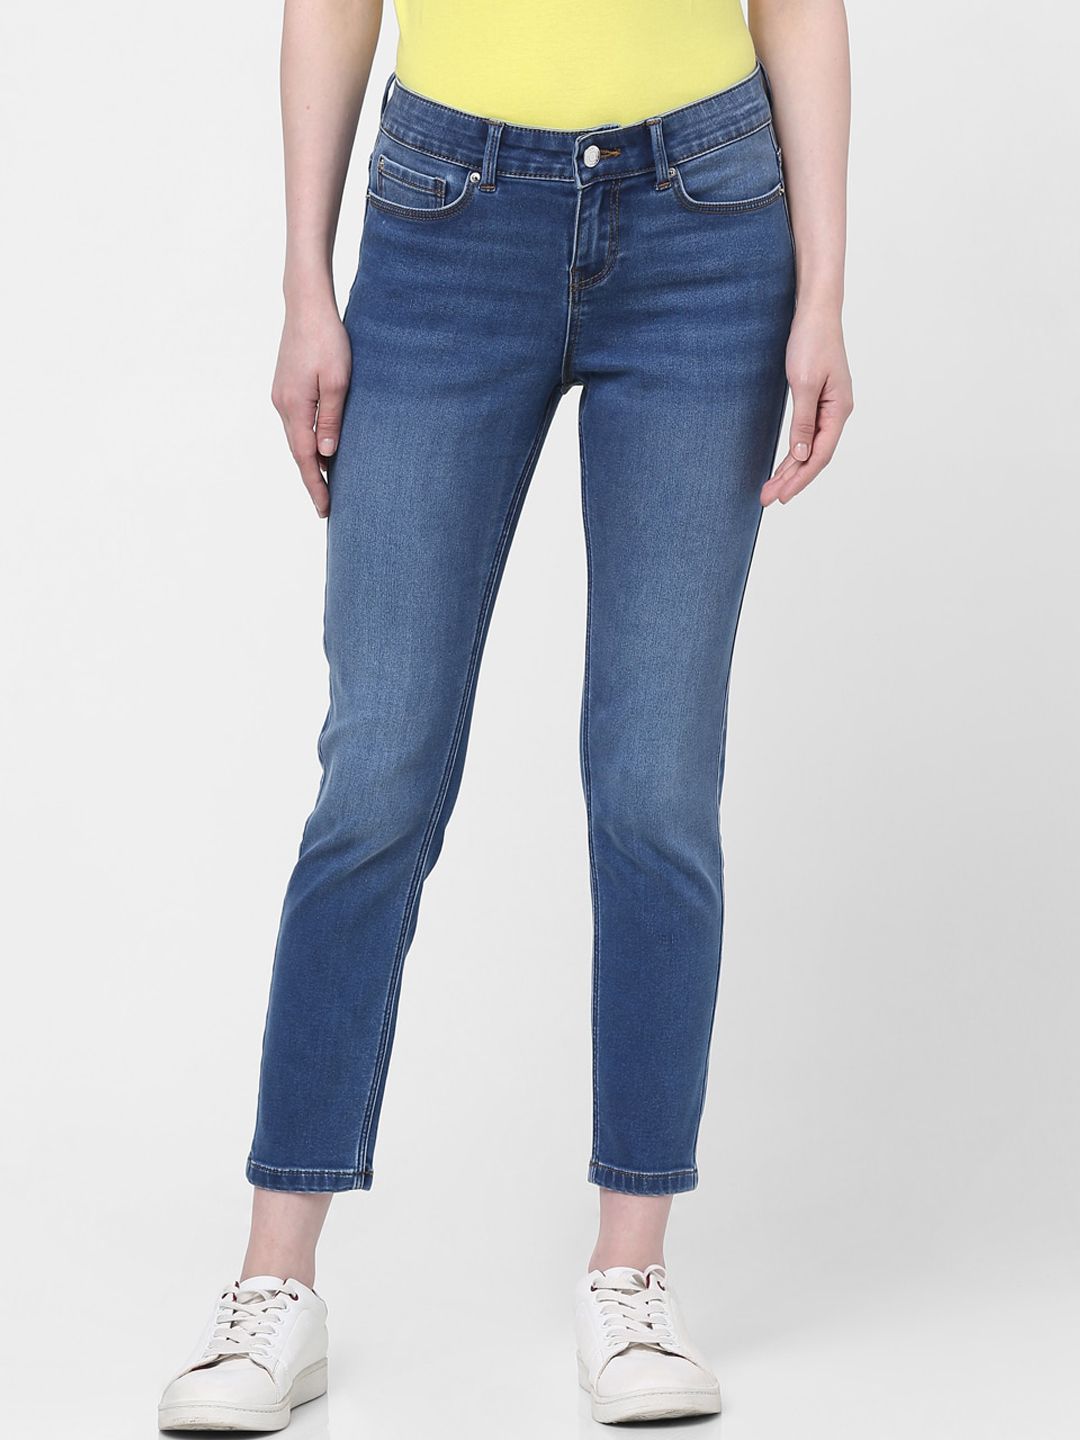 Vero Moda Women Blue Skinny Fit Light Fade Jeans Price in India